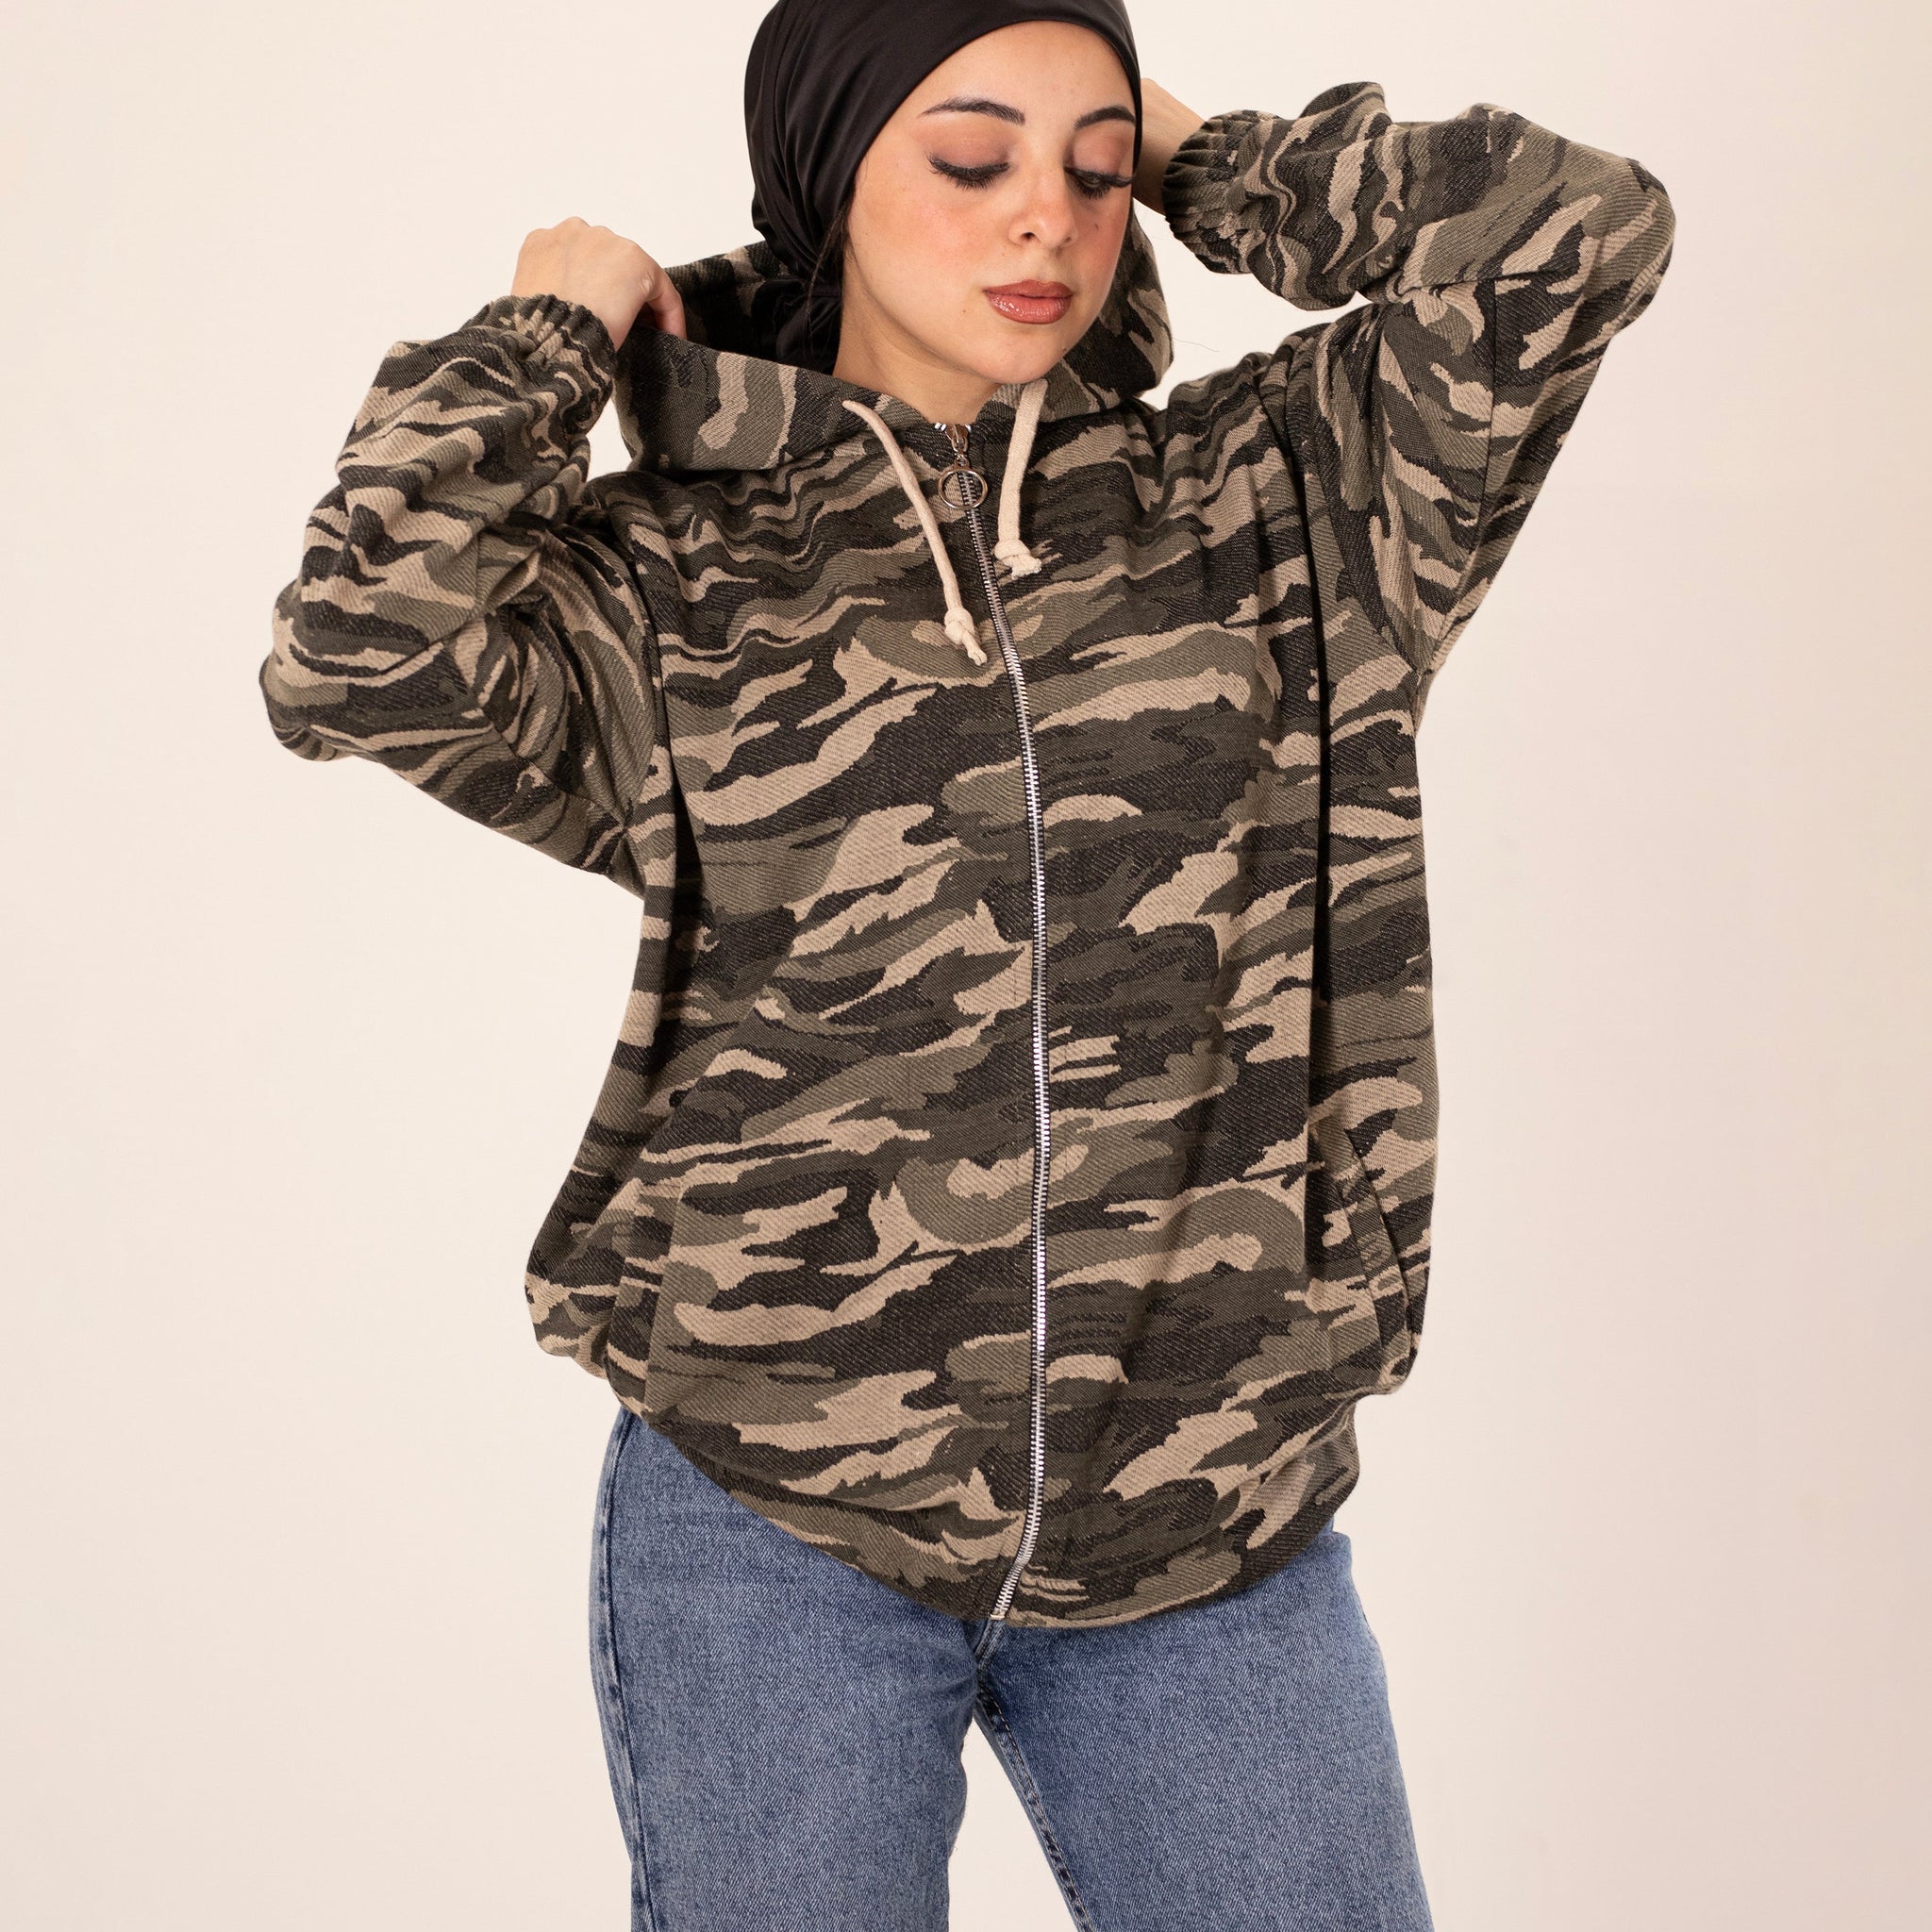 hoodie with army-printed